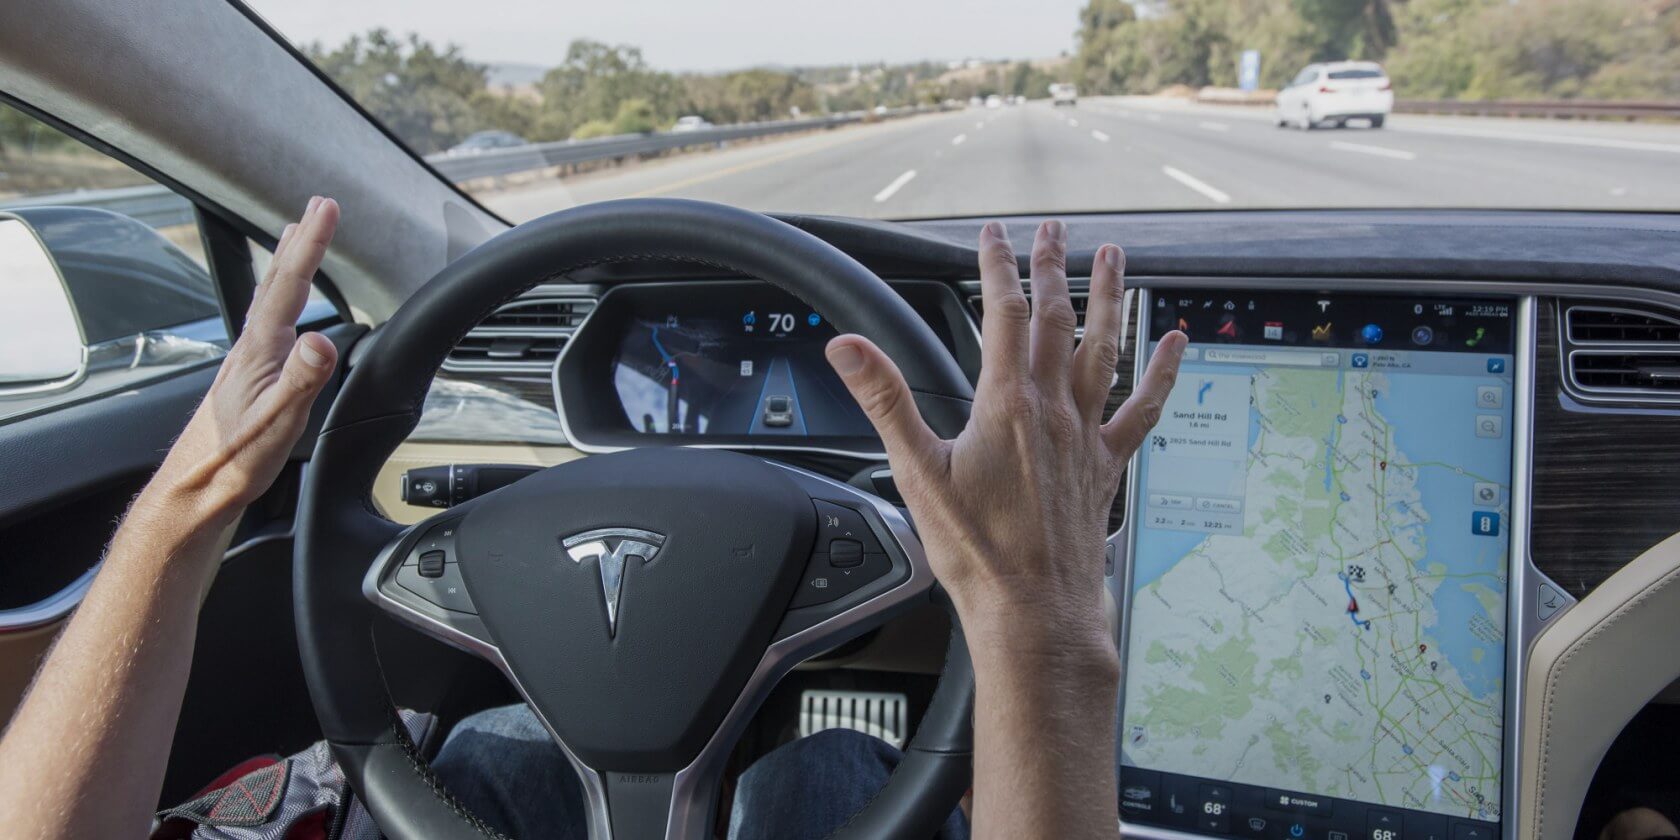 Tesla's vehicles have traveled one billion miles with Autopilot engaged